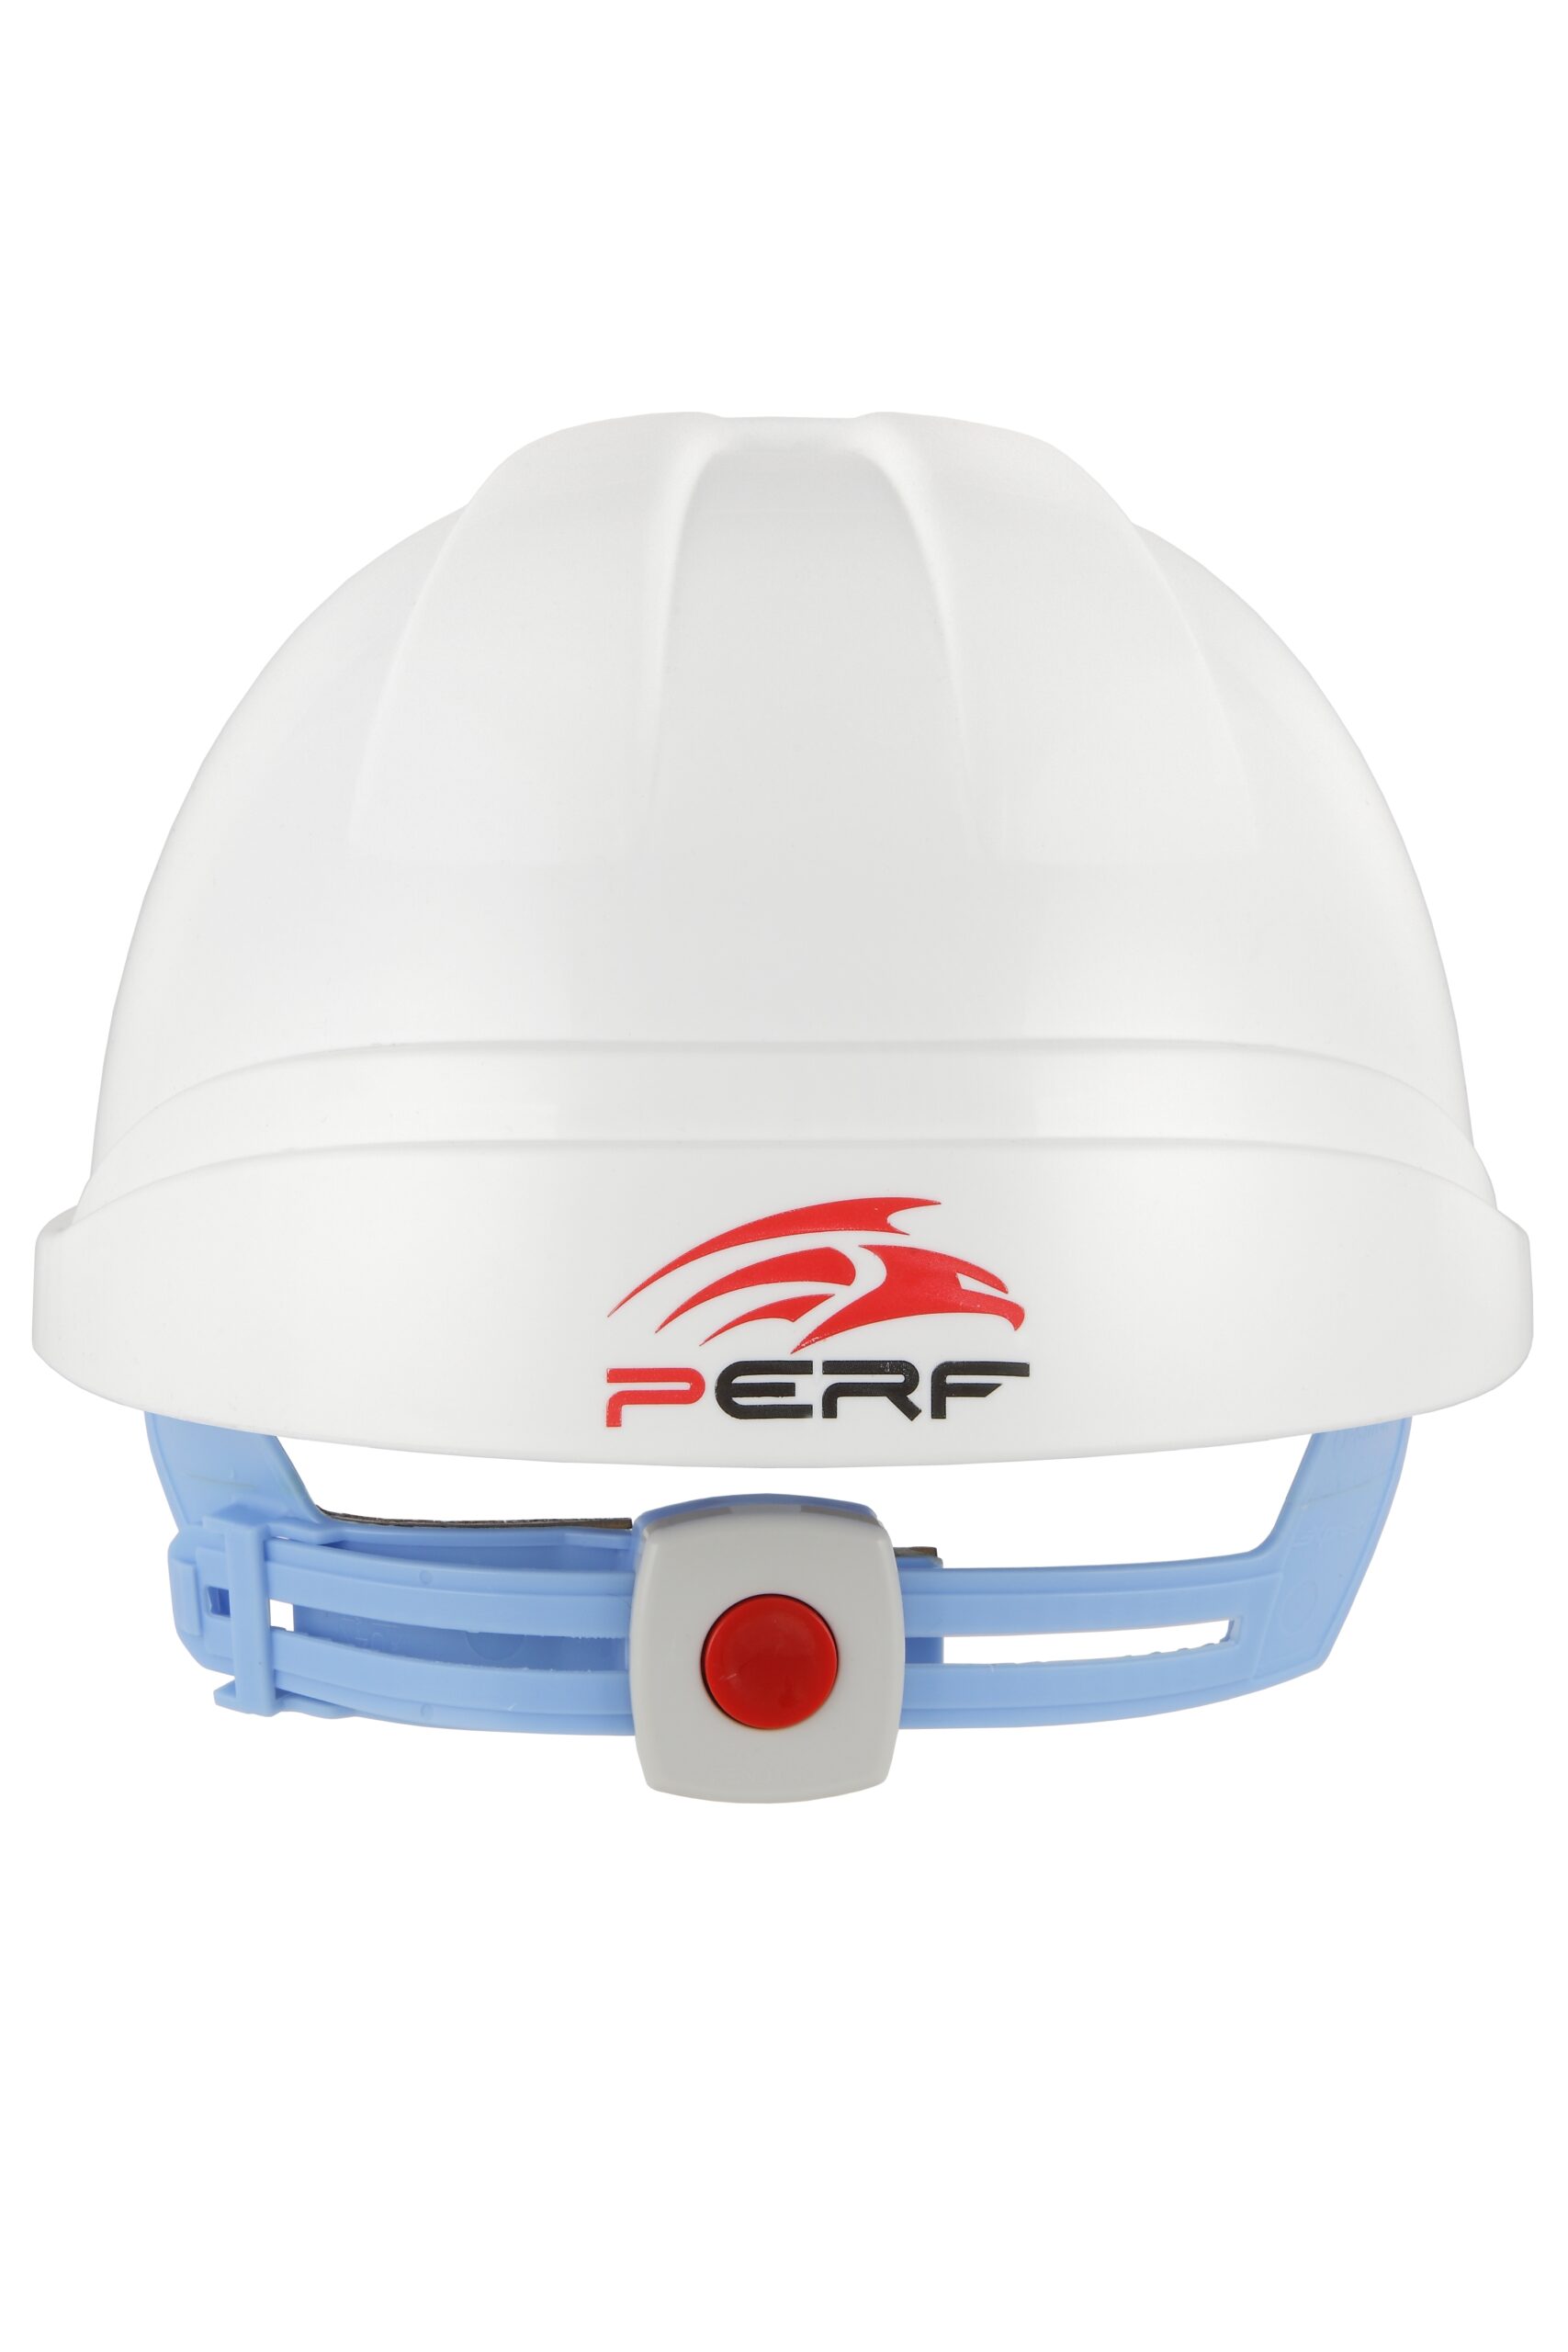 Performance Brands H2 Y-Shield XP5 Push Button Xprss-P™ Safety Helmet (Case of 20)-0